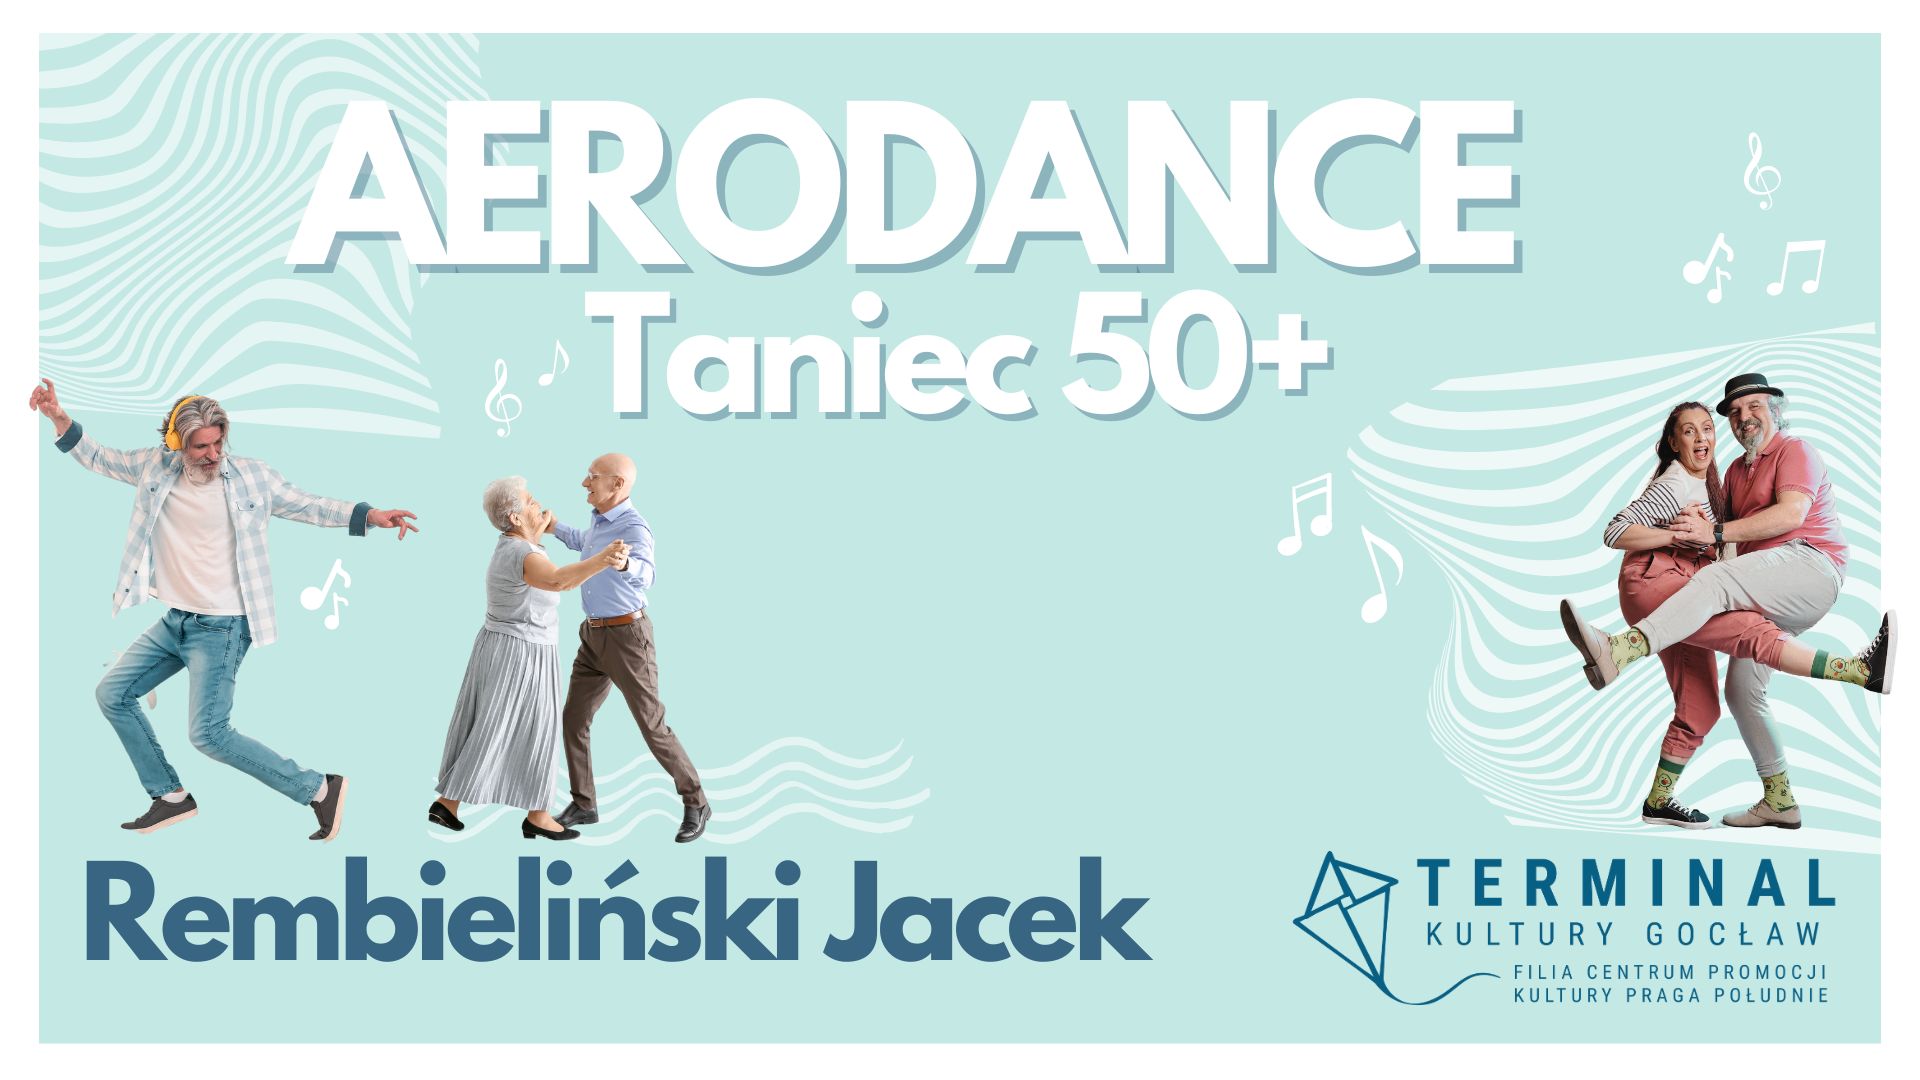 Aerodance - taniec 50+